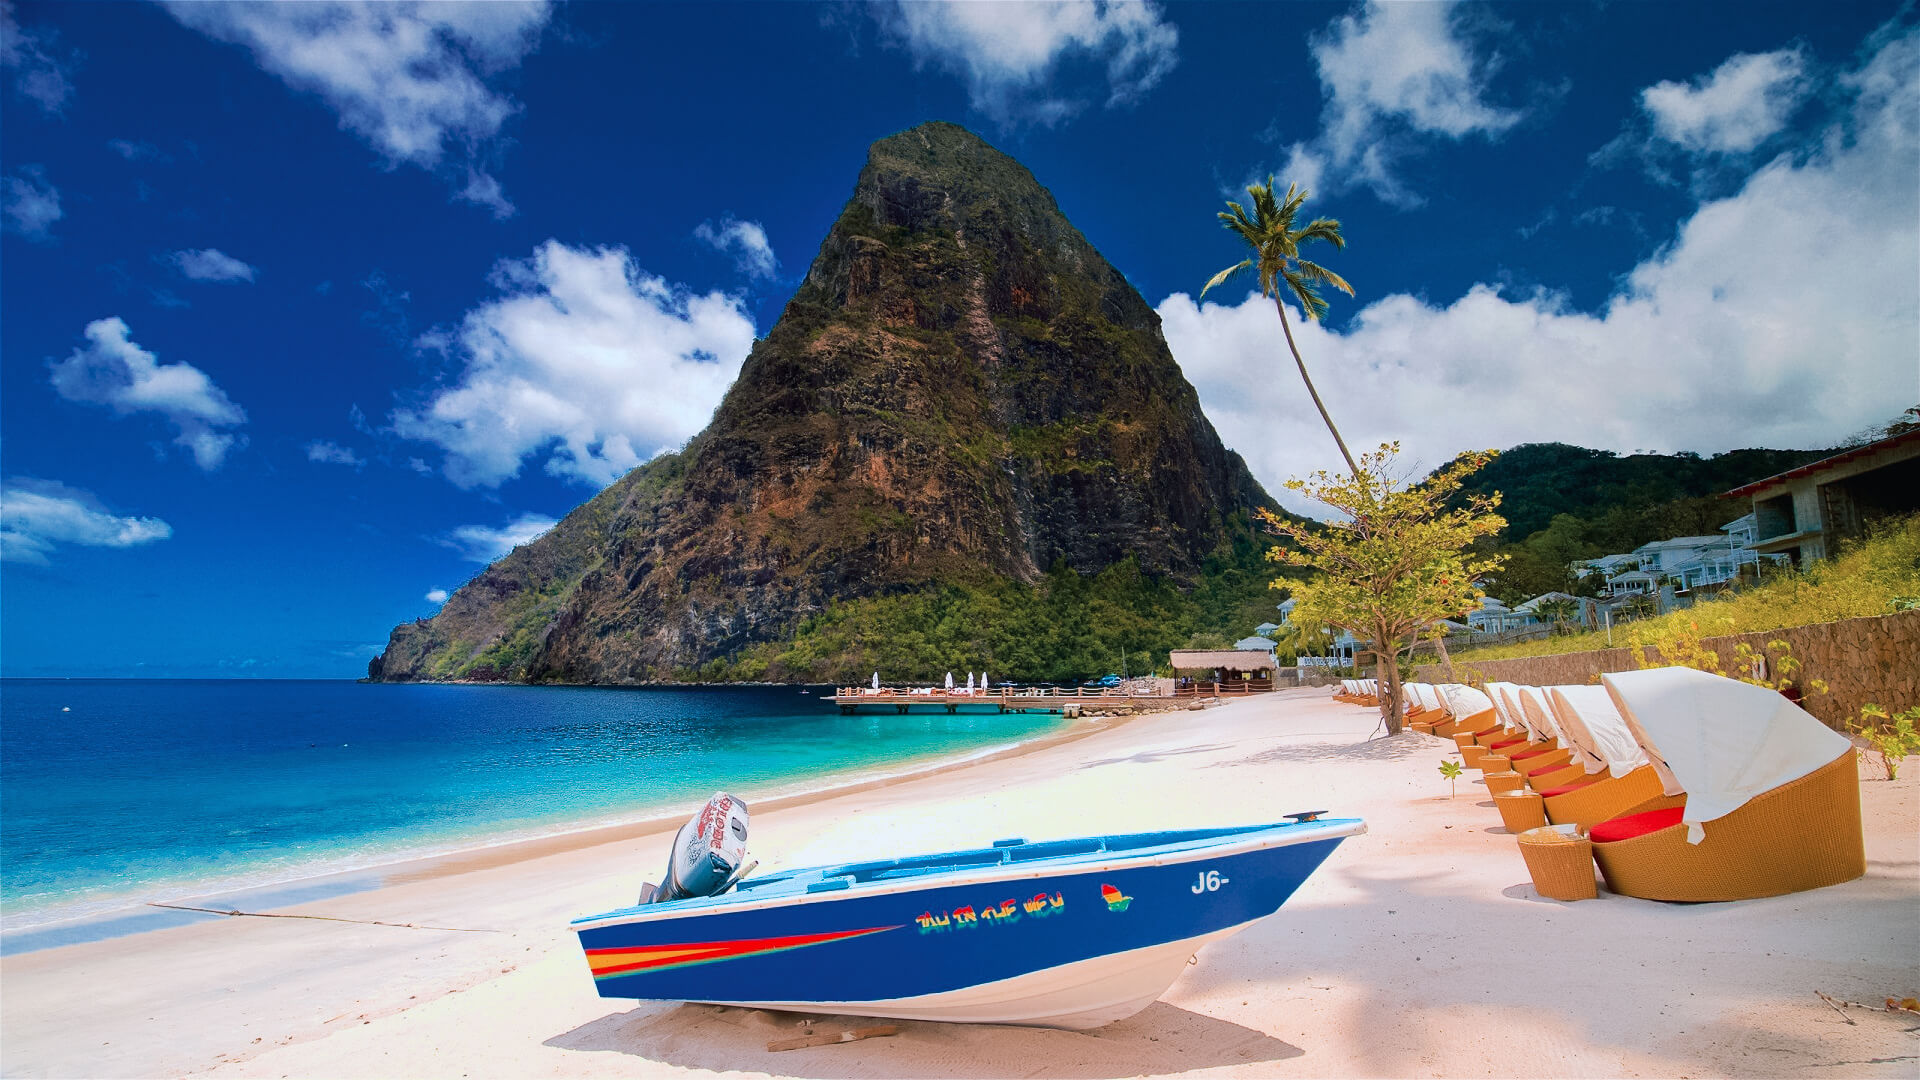 Saint Lucia travel guide - Travel S helper